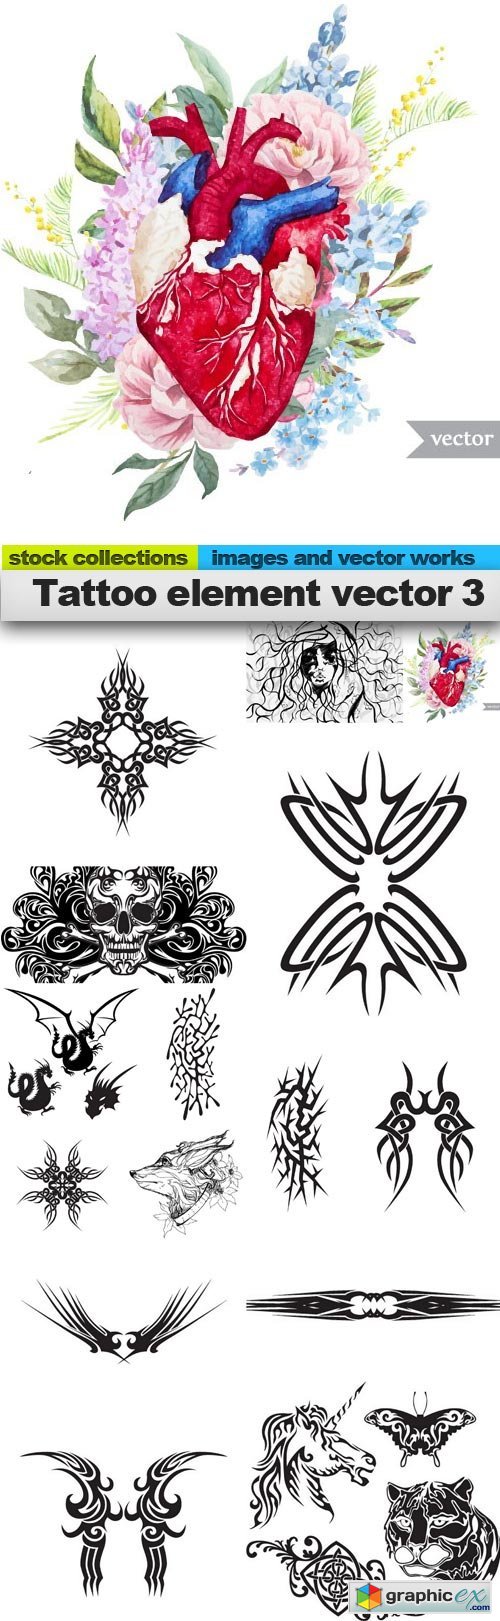 Tattoo element vector 3, 15 x EPS